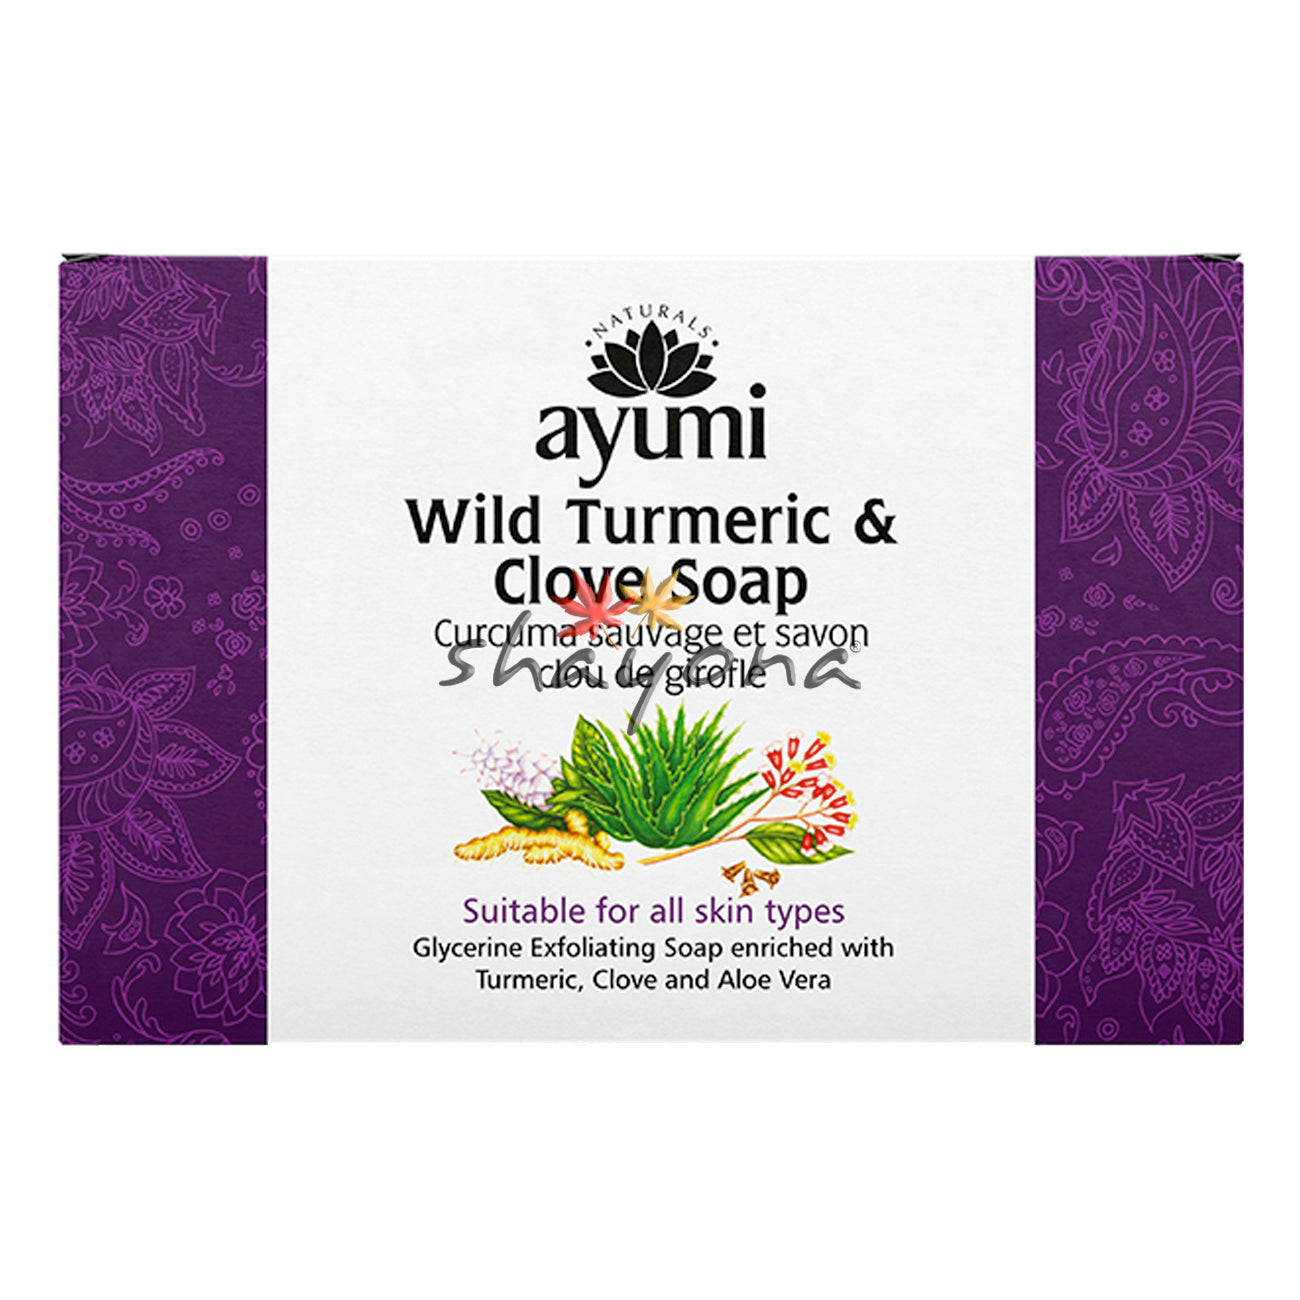 Ayumi Wild Turmeric & Clove Soap